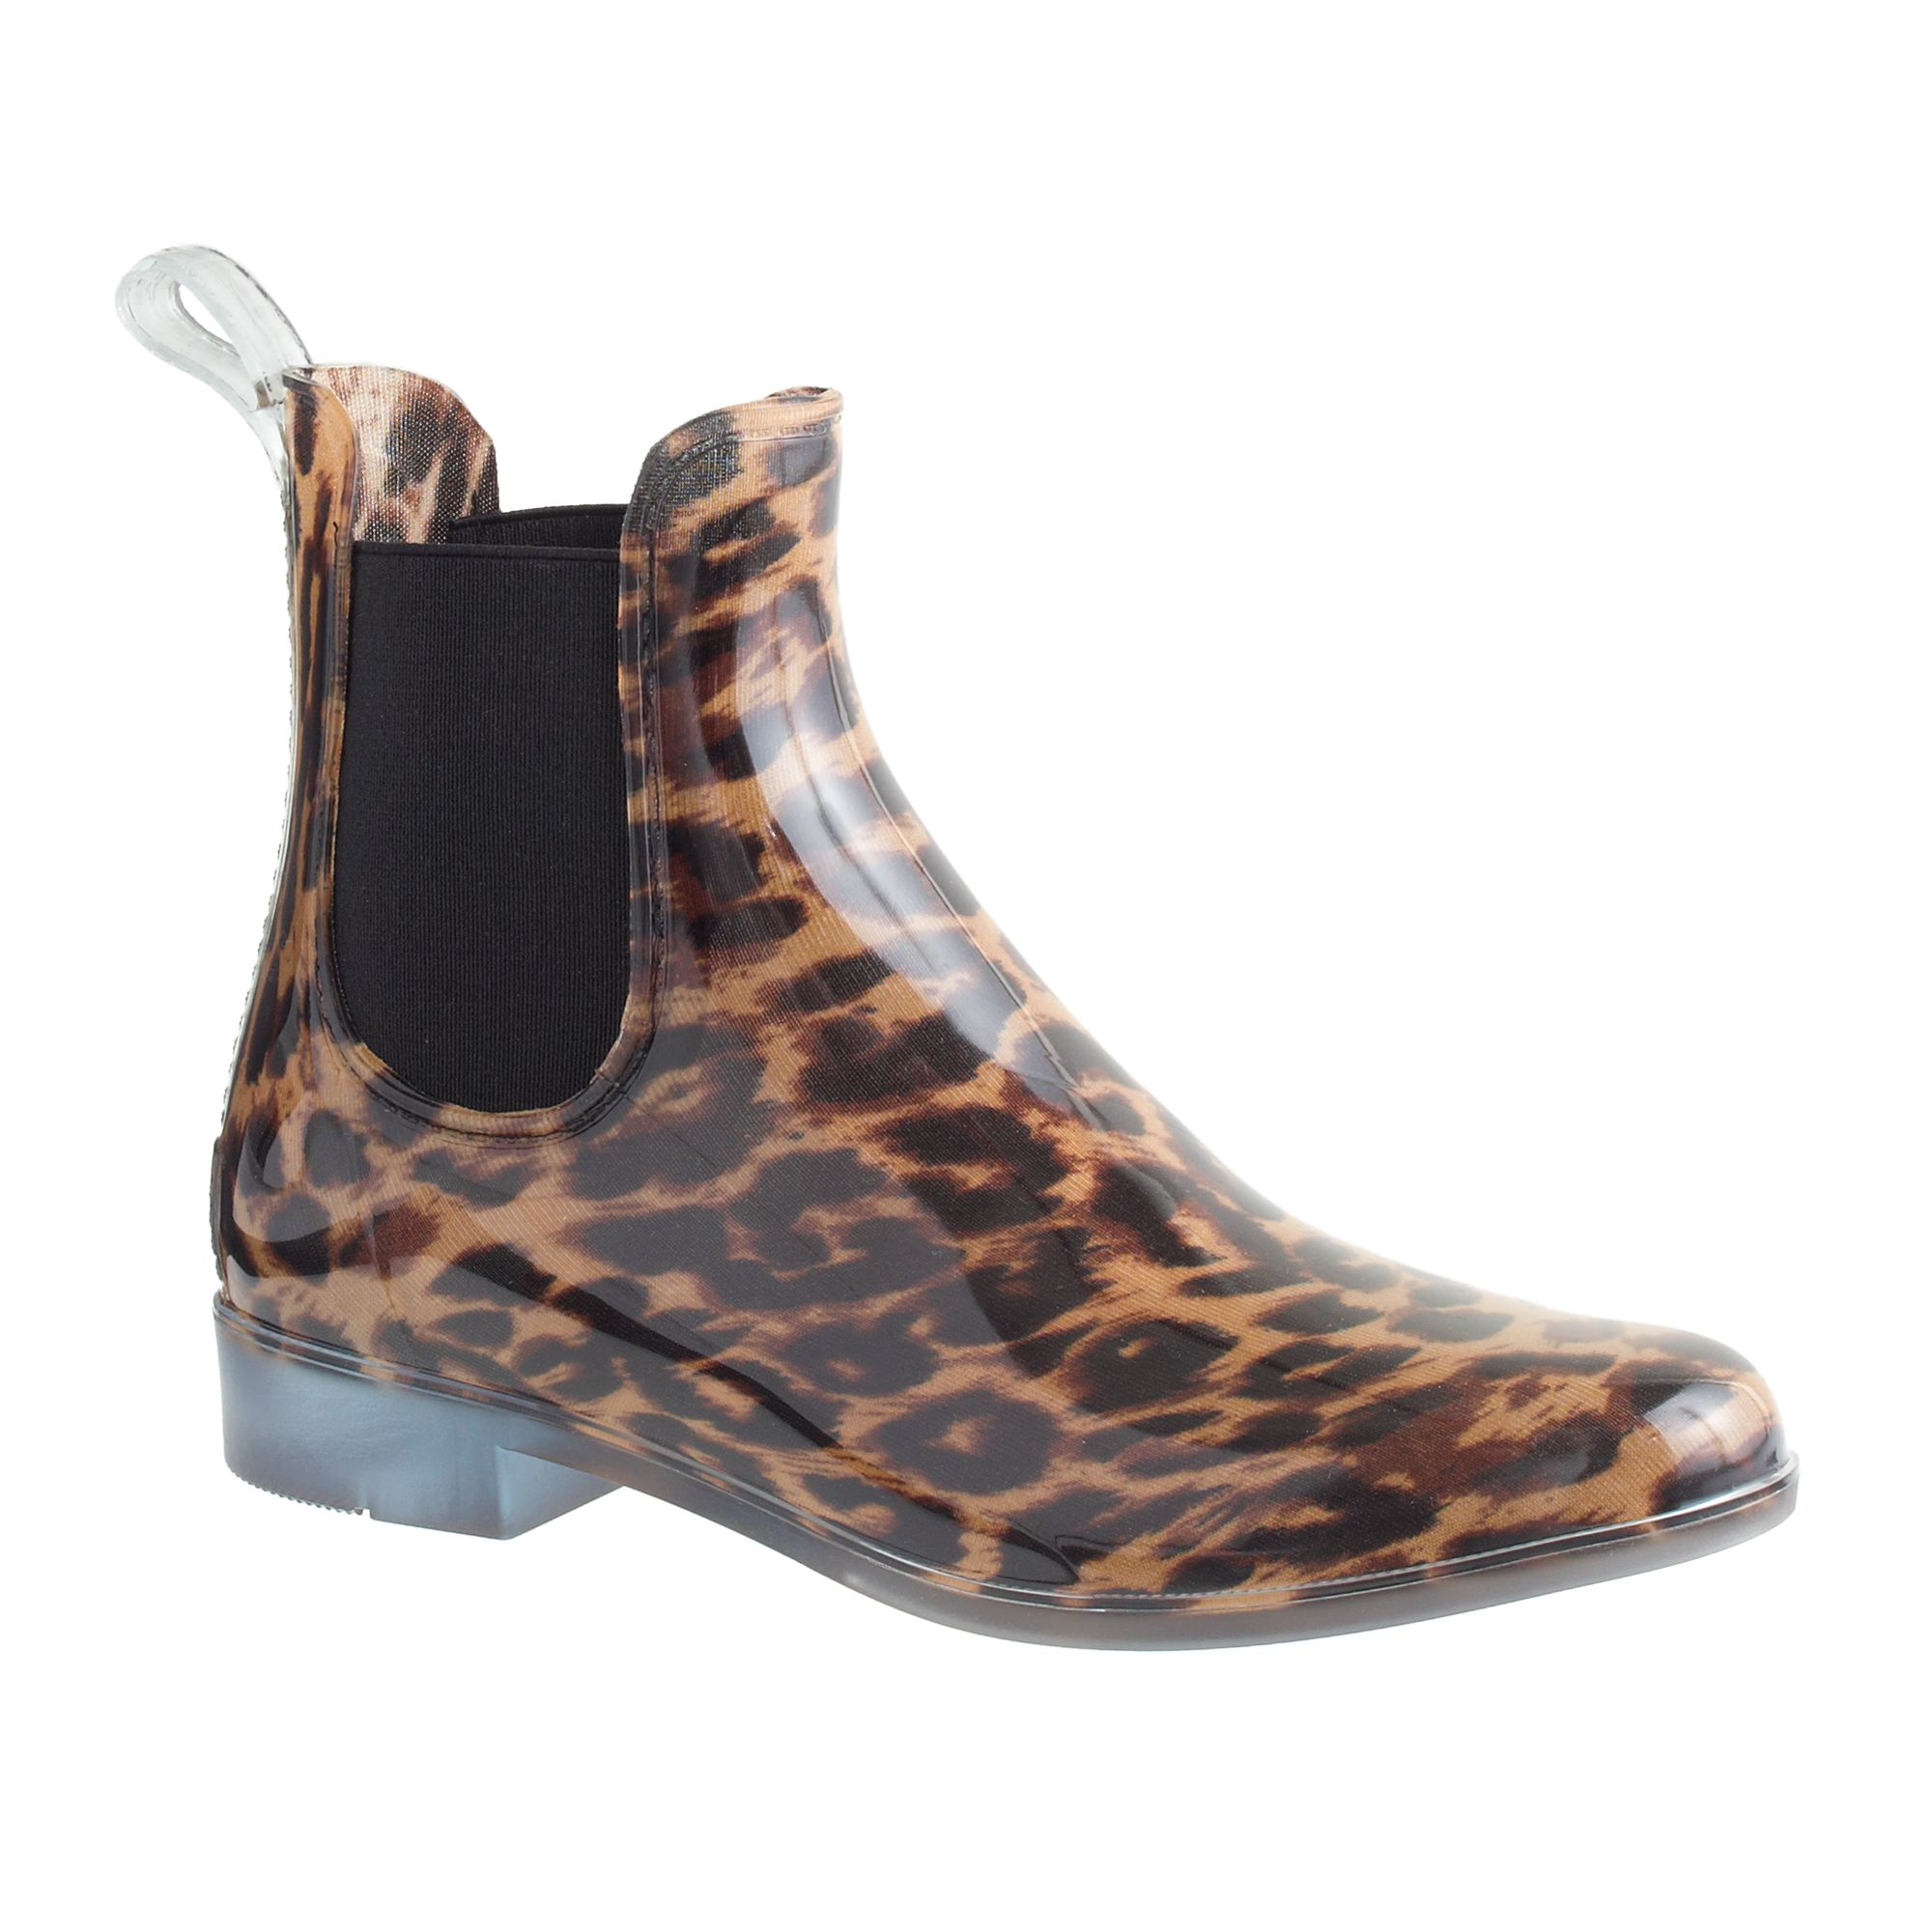 J.crew Chelsea Leopard Rain Boots in Animal (classic leopard) | Lyst